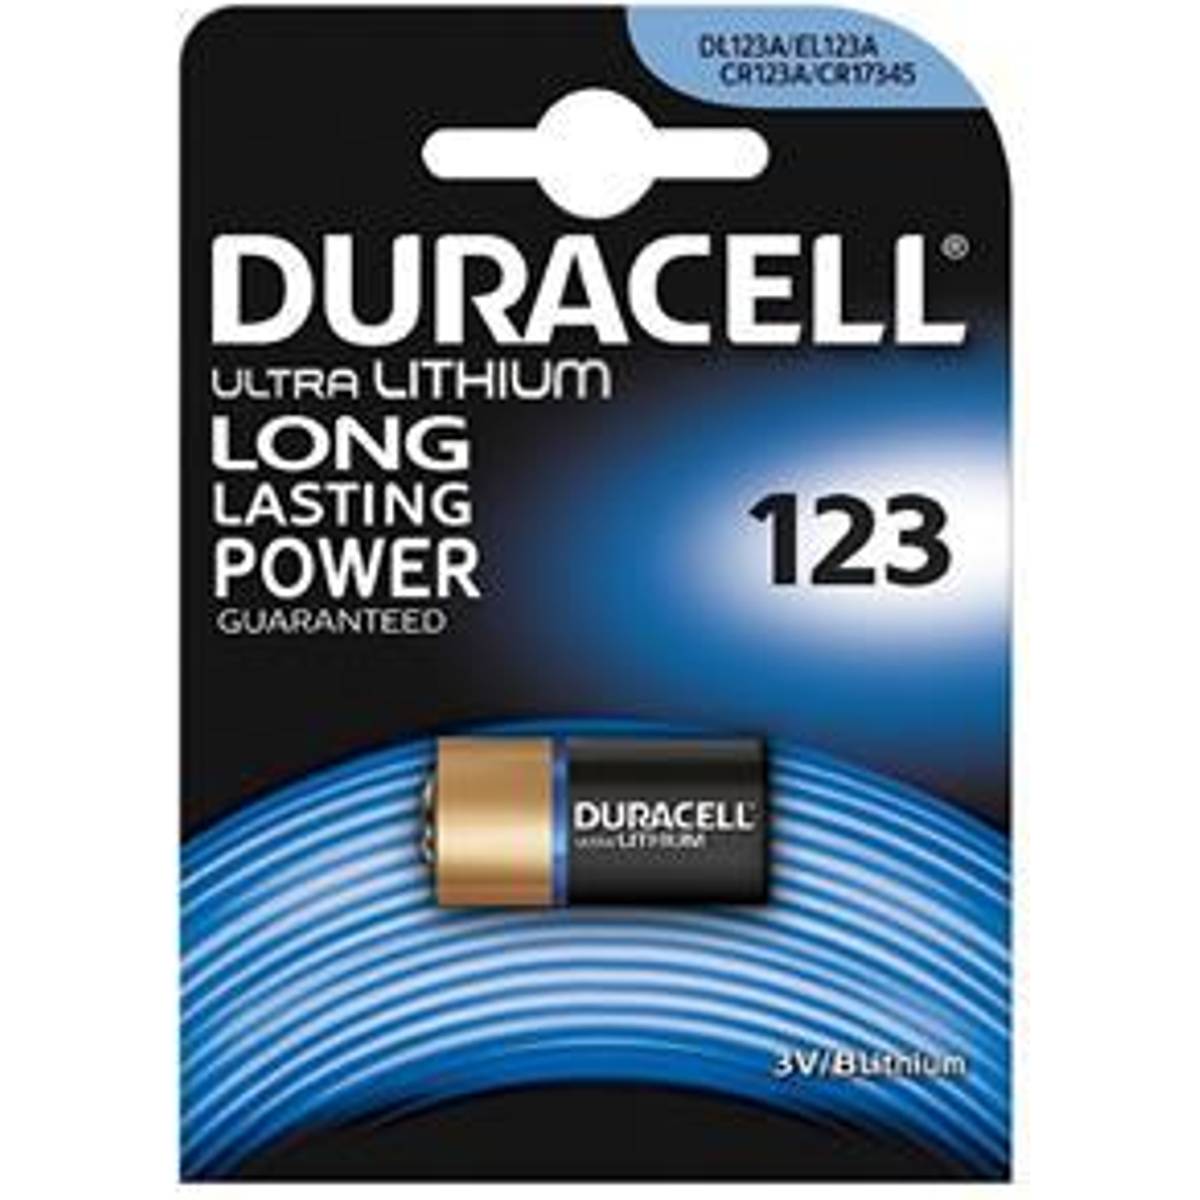 Lithium 123 batterier • Find den billigste pris hos PriceRunner nu »